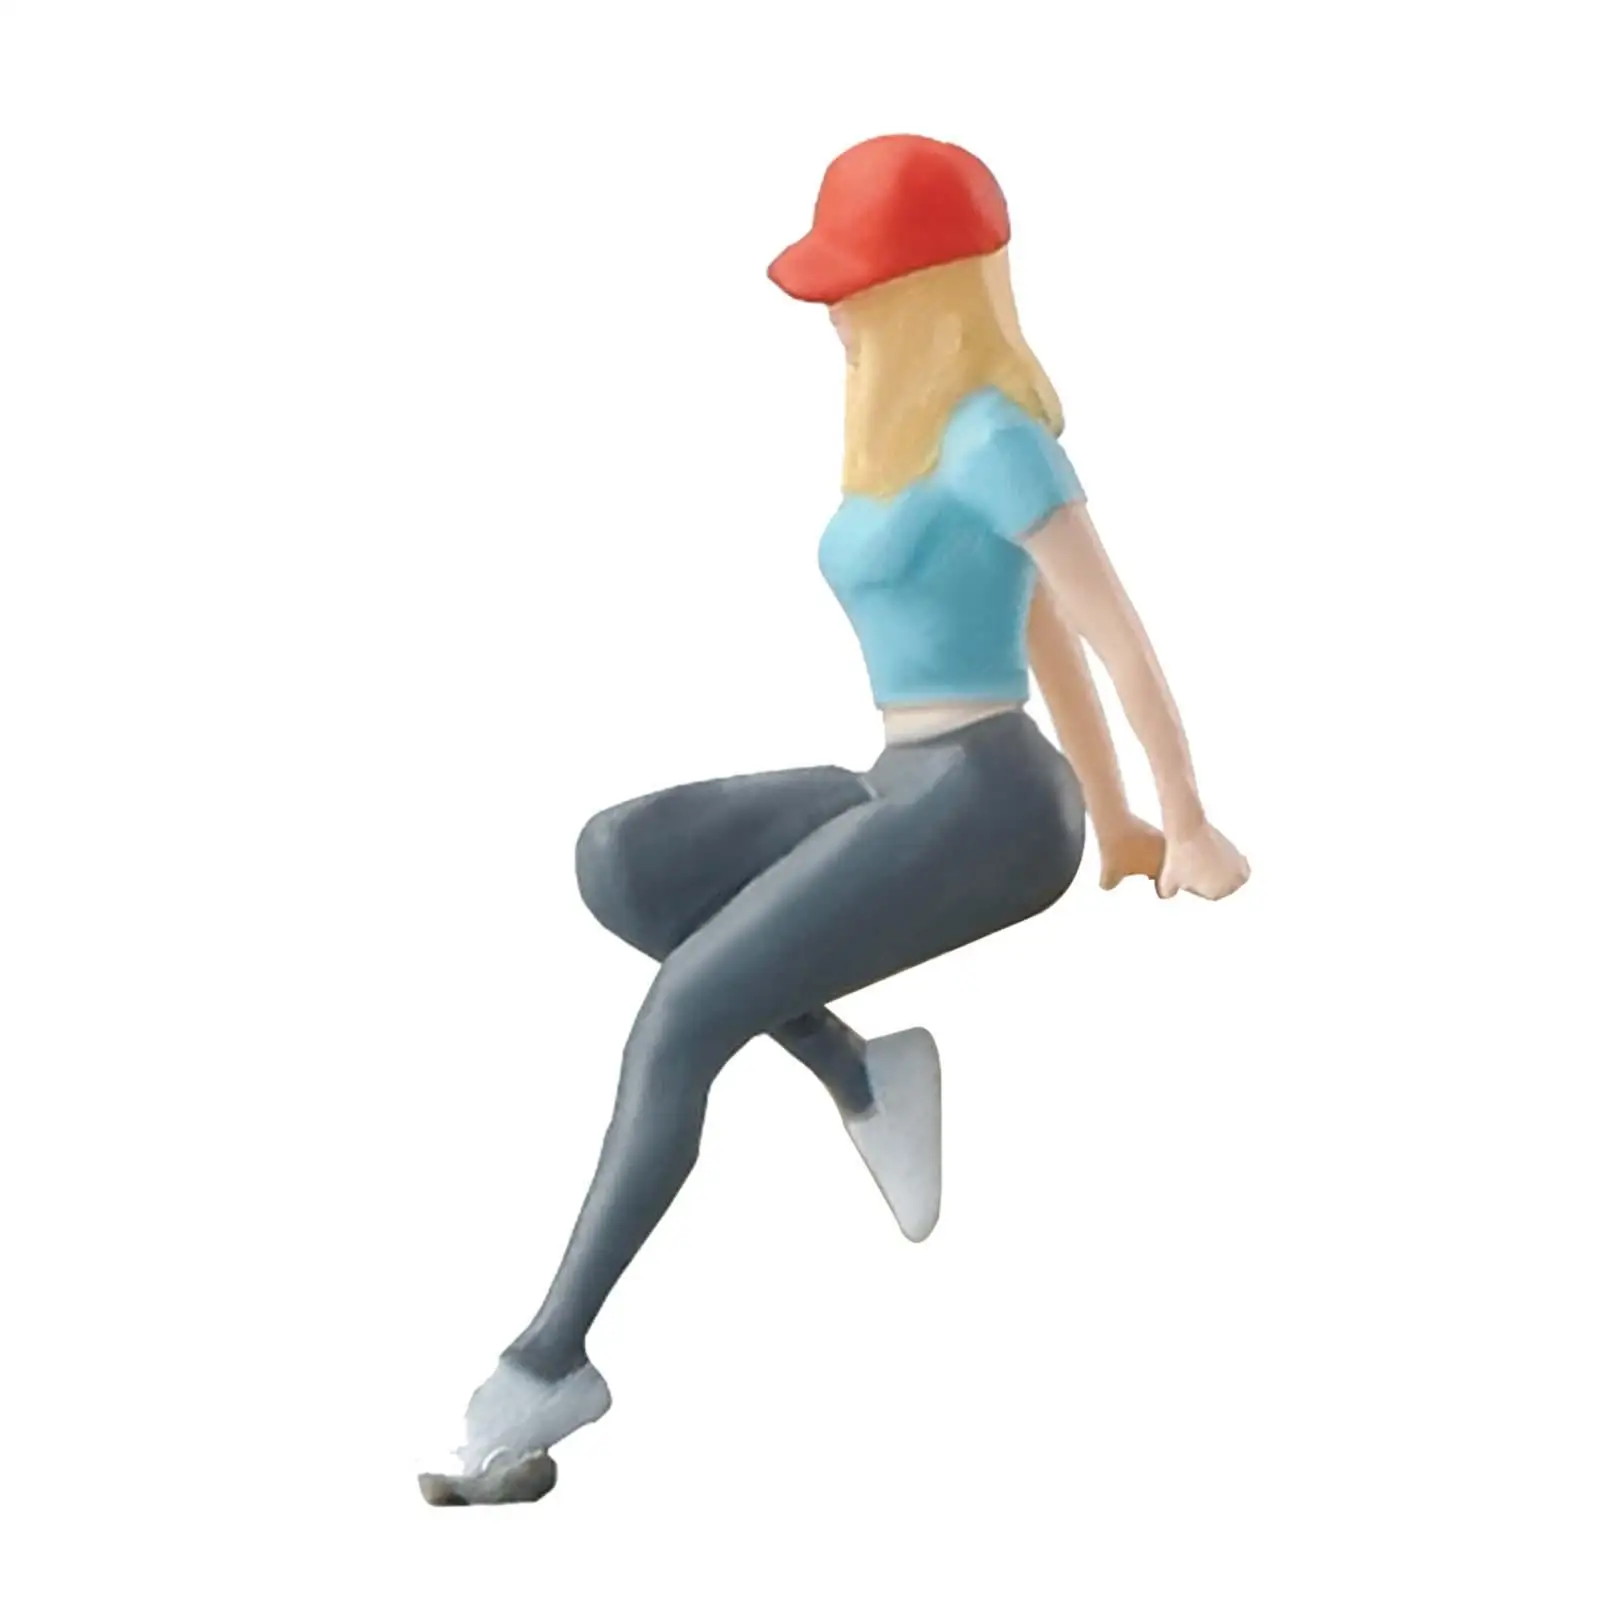 Miniature Scene People Role Play Figure Simulation Miniature toy:64 Girl Figure for Model Train Layout Miniature Scene Diorama